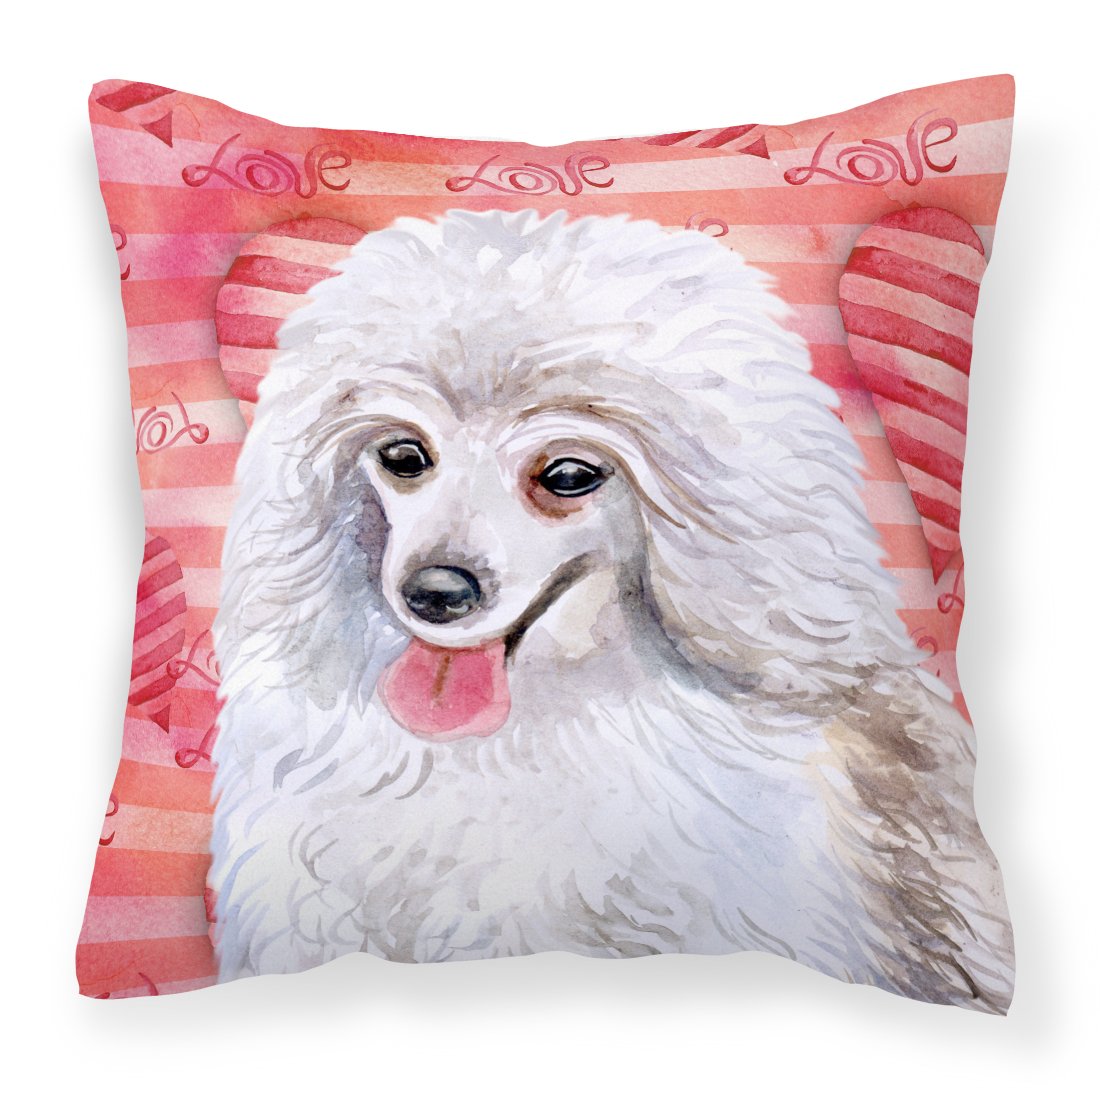 Medium White Poodle Love Fabric Decorative Pillow BB9770PW1818 by Caroline's Treasures